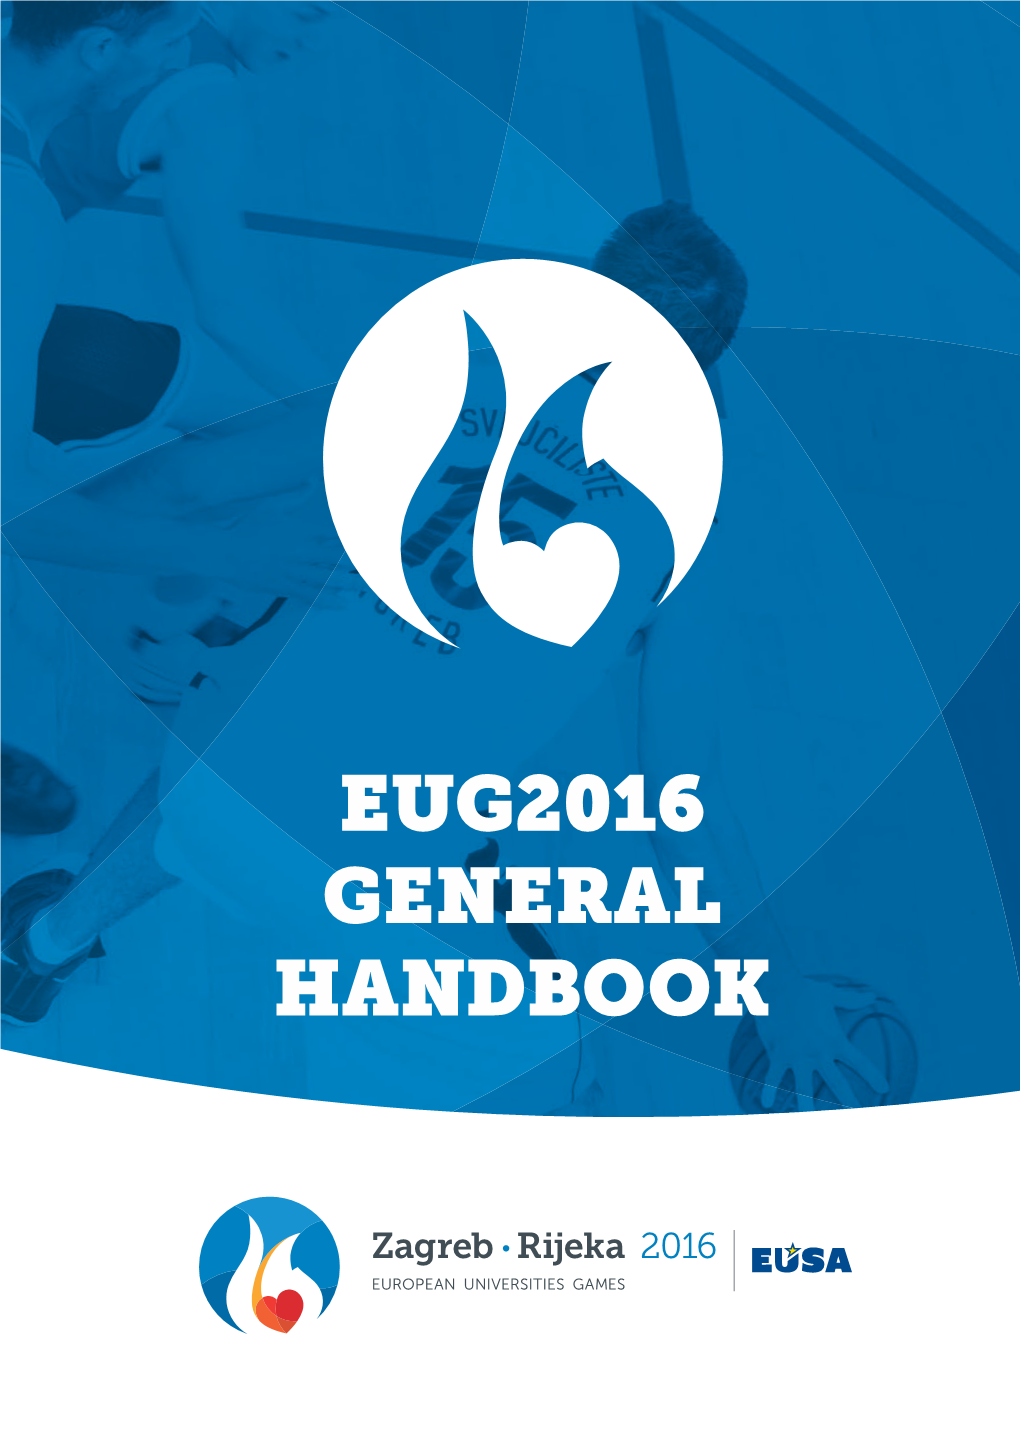 Eug2016 General Handbook